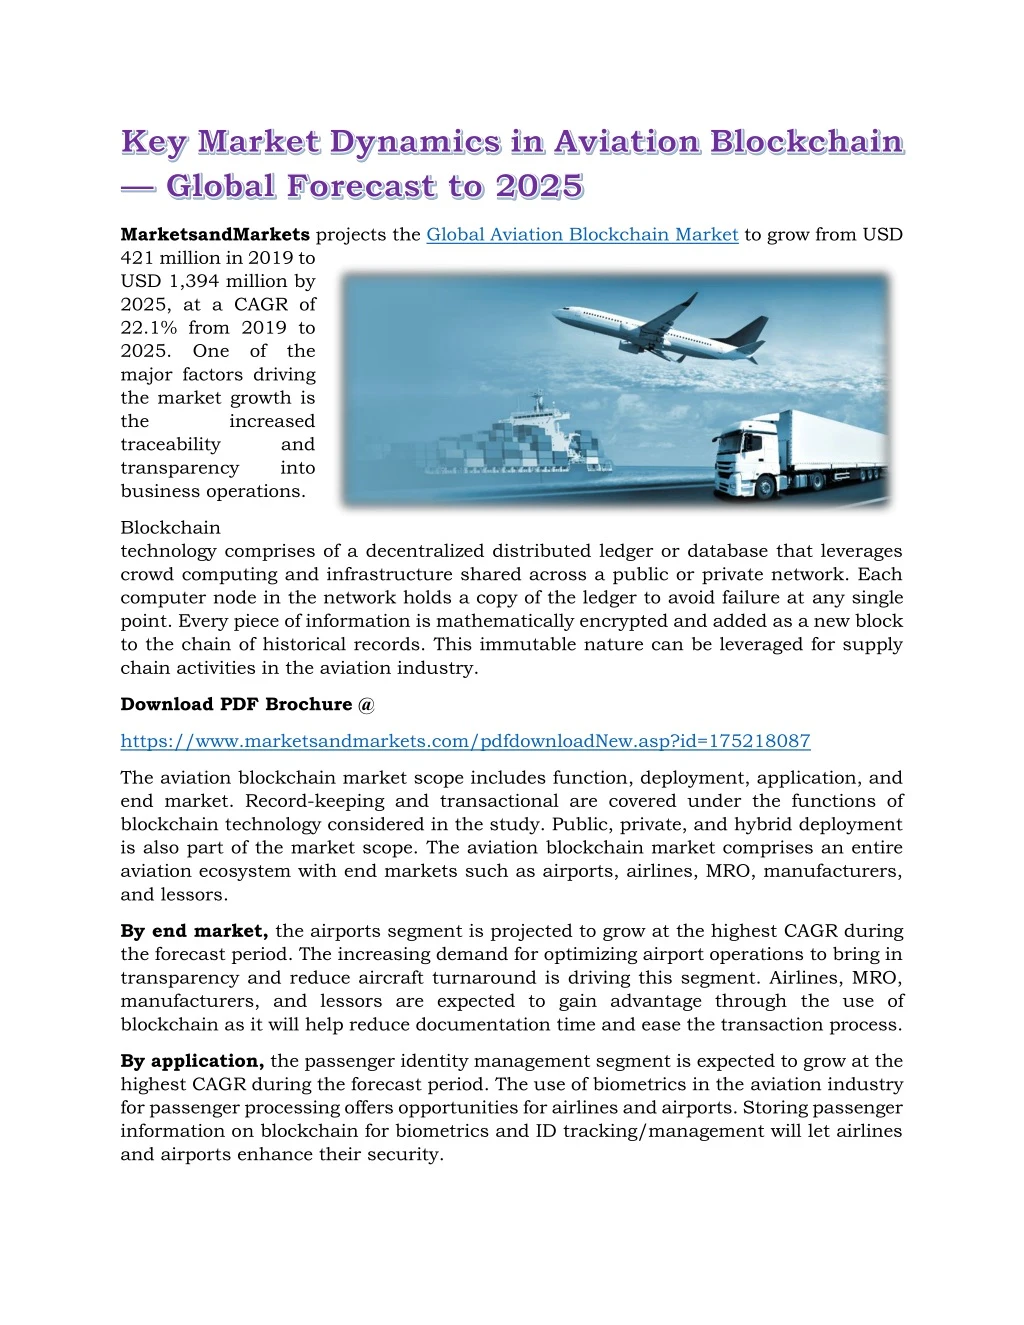 marketsandmarkets projects the global aviation